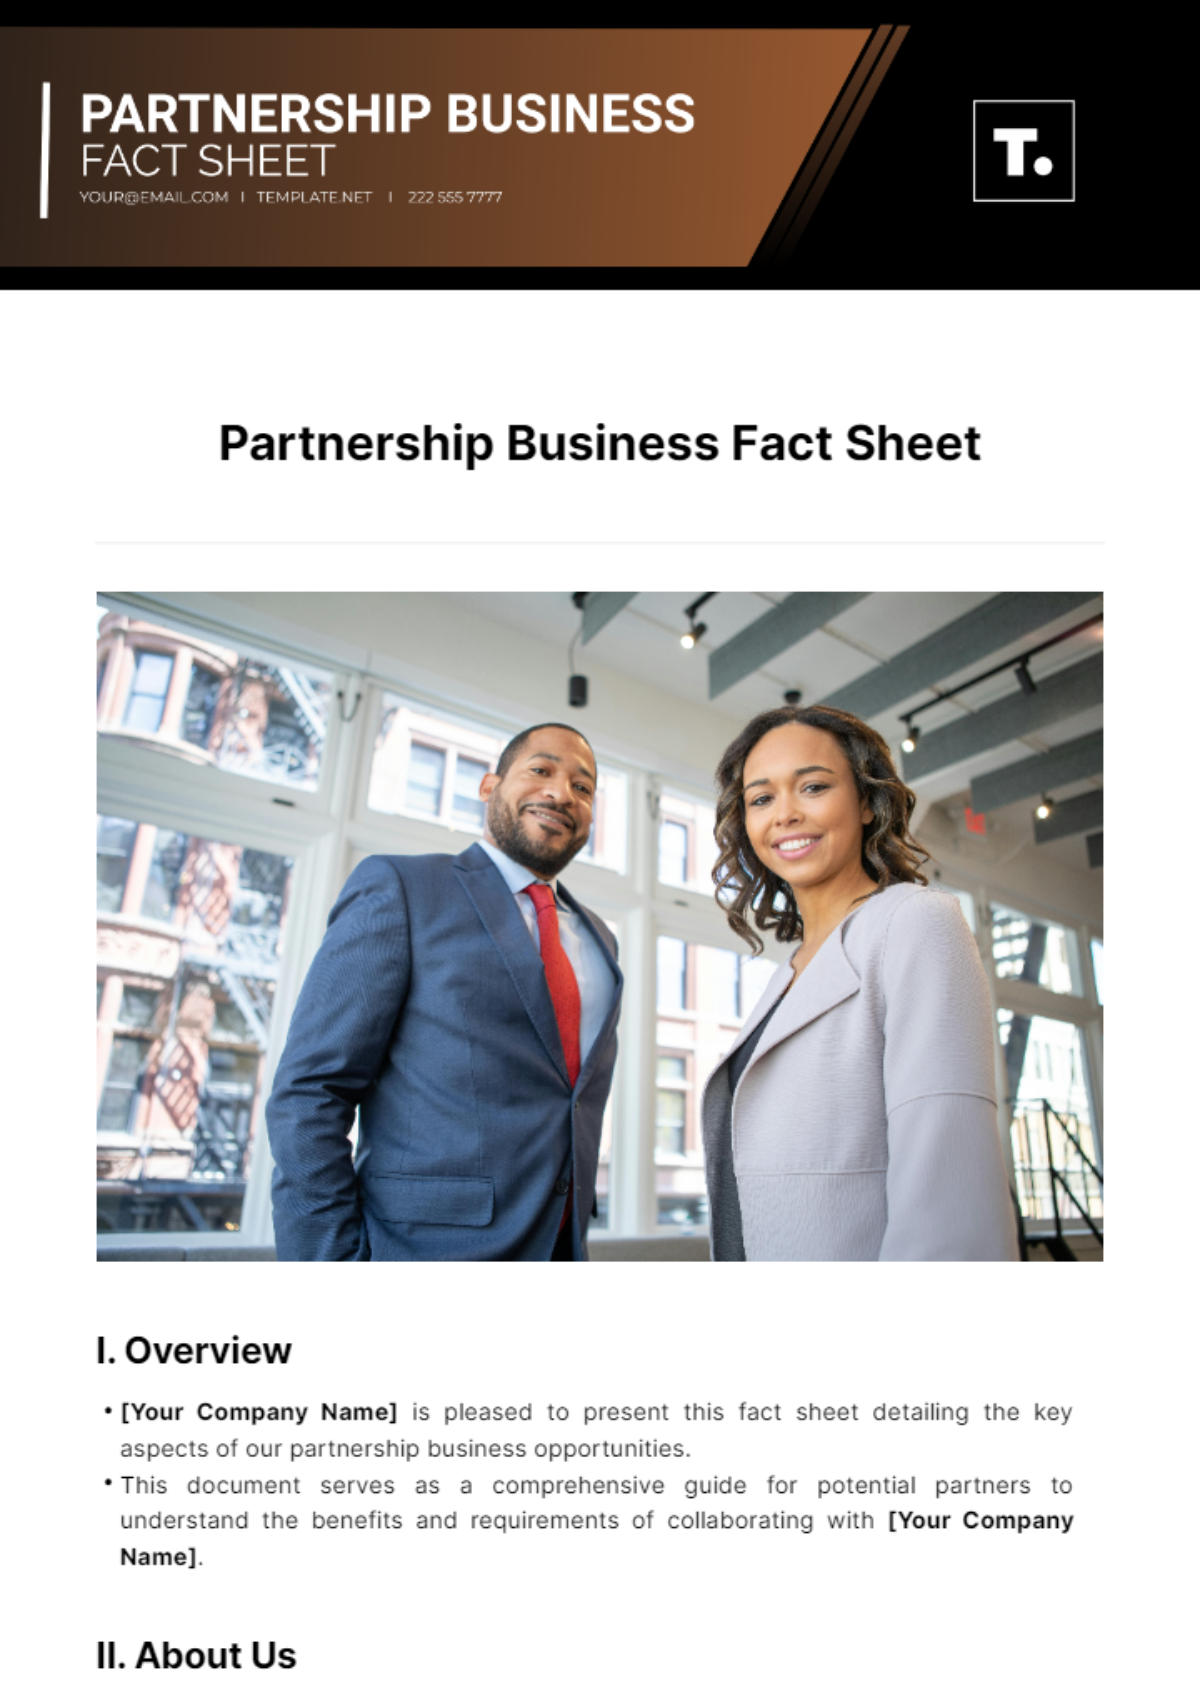 Partnership Business Fact Sheet Template